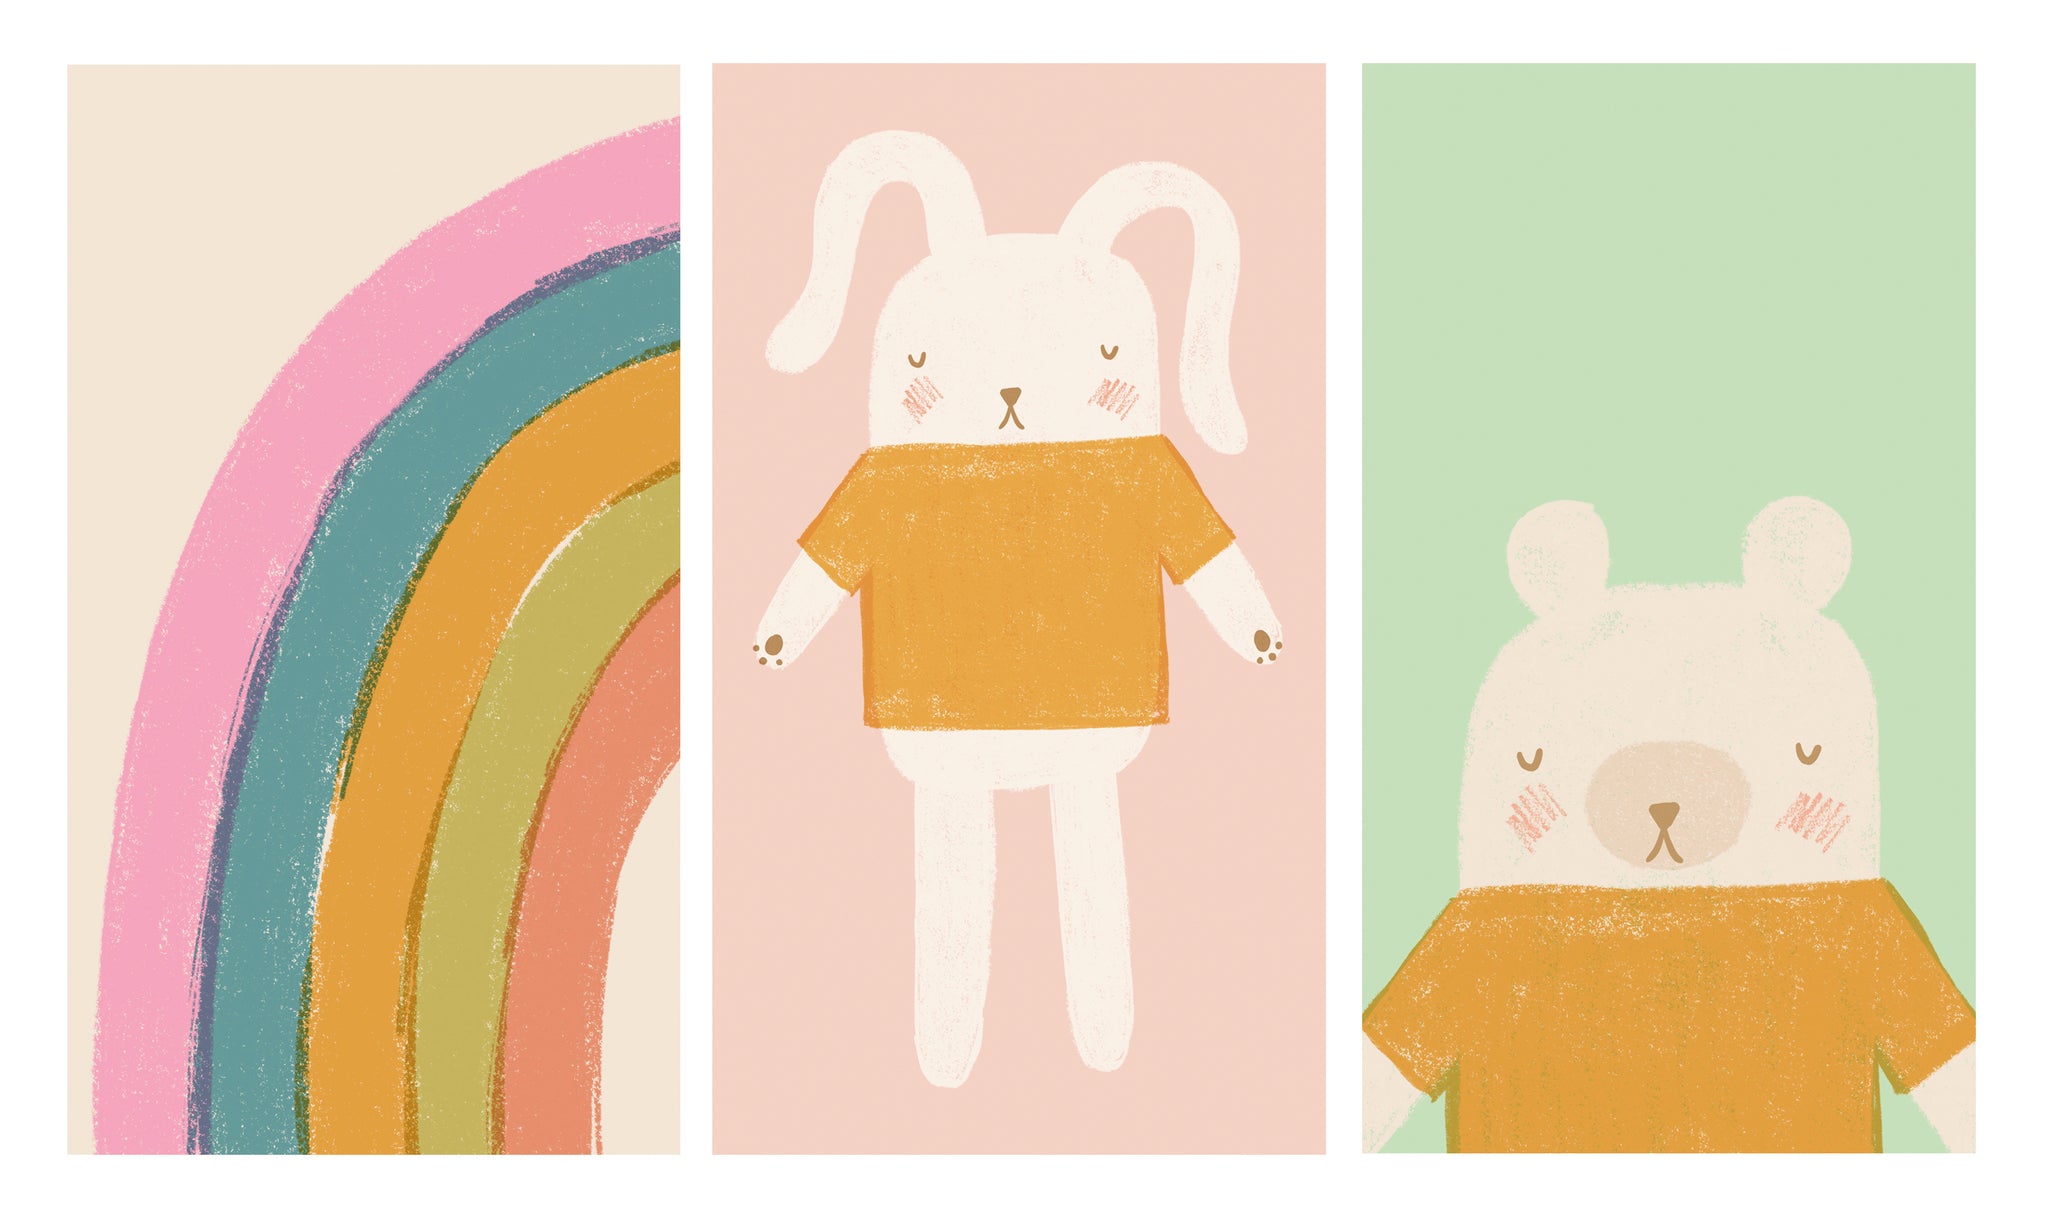 Three phone background designs. Colourful half rainbow, illustrated teddy bear on blush background and an illustrated teddy bear on a mint background